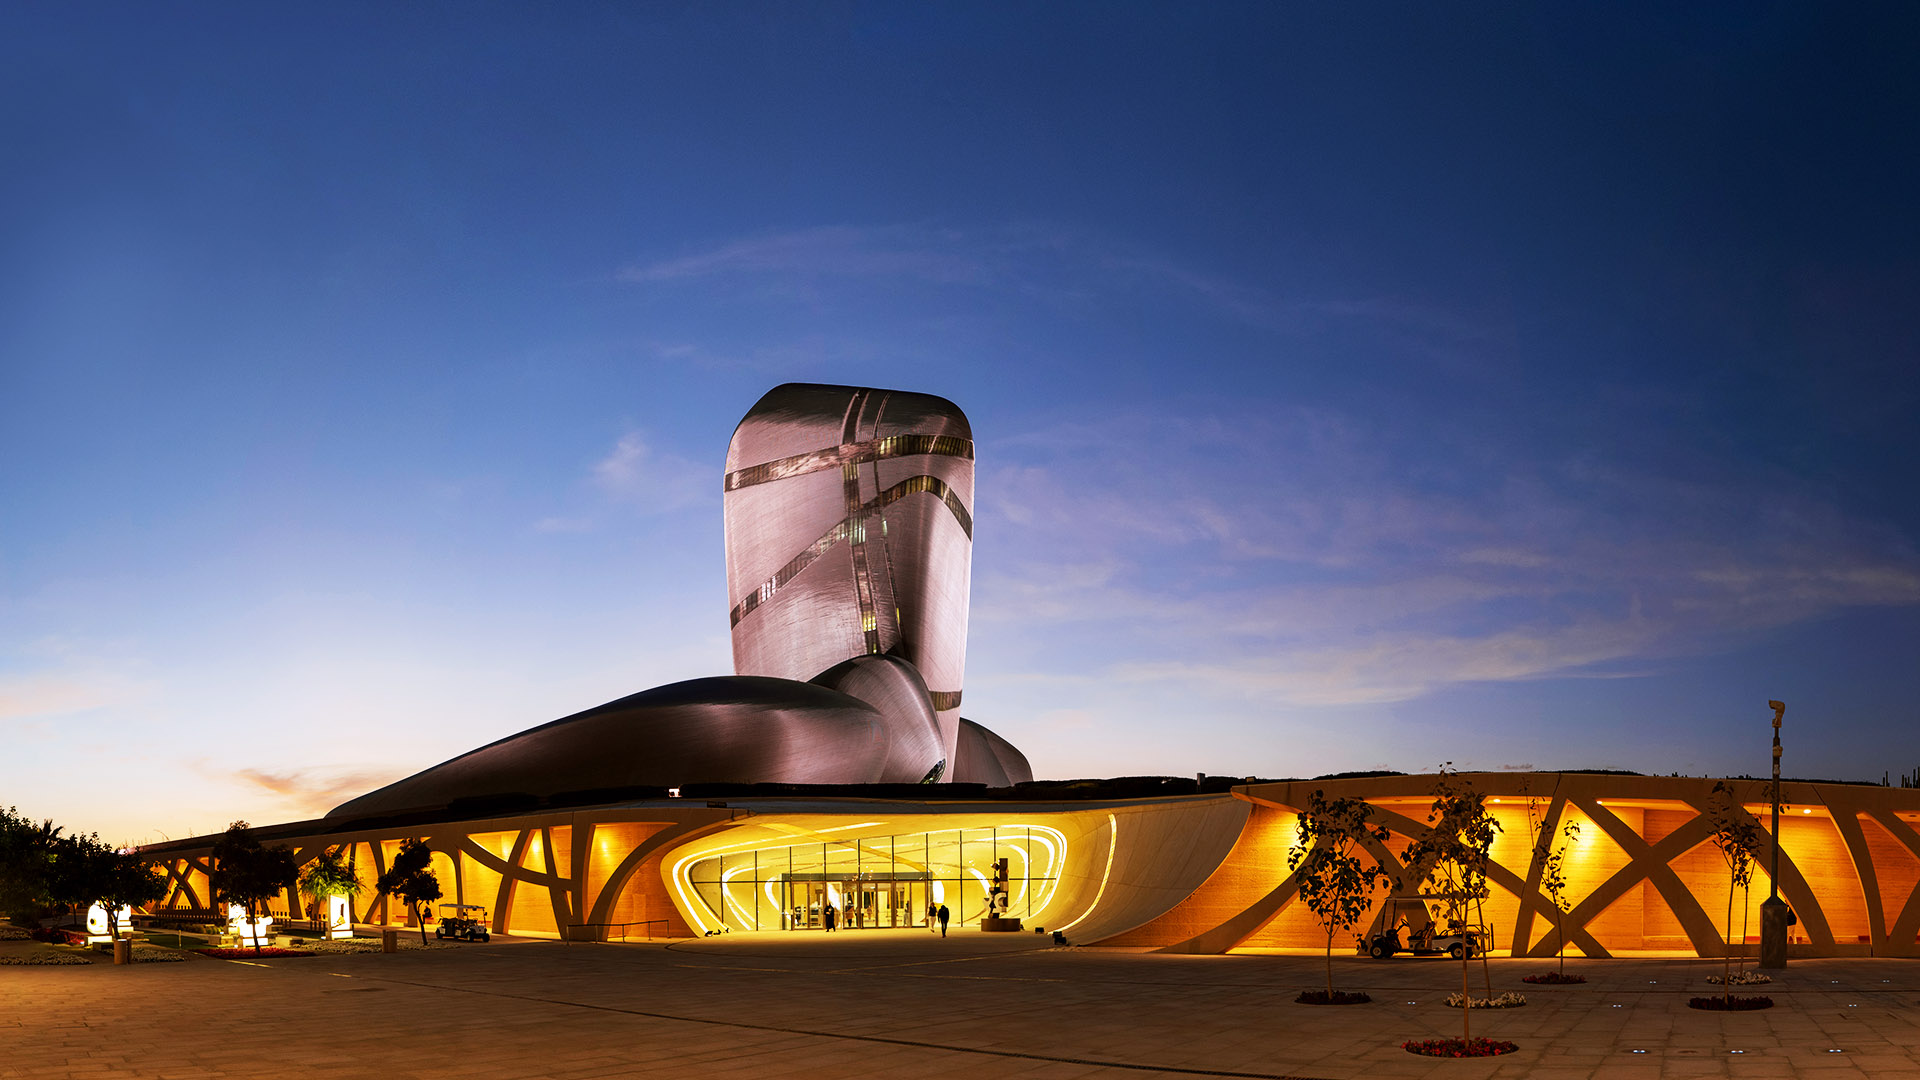 7 Museum In Riyadh To Learn The History of Saudi Arabia